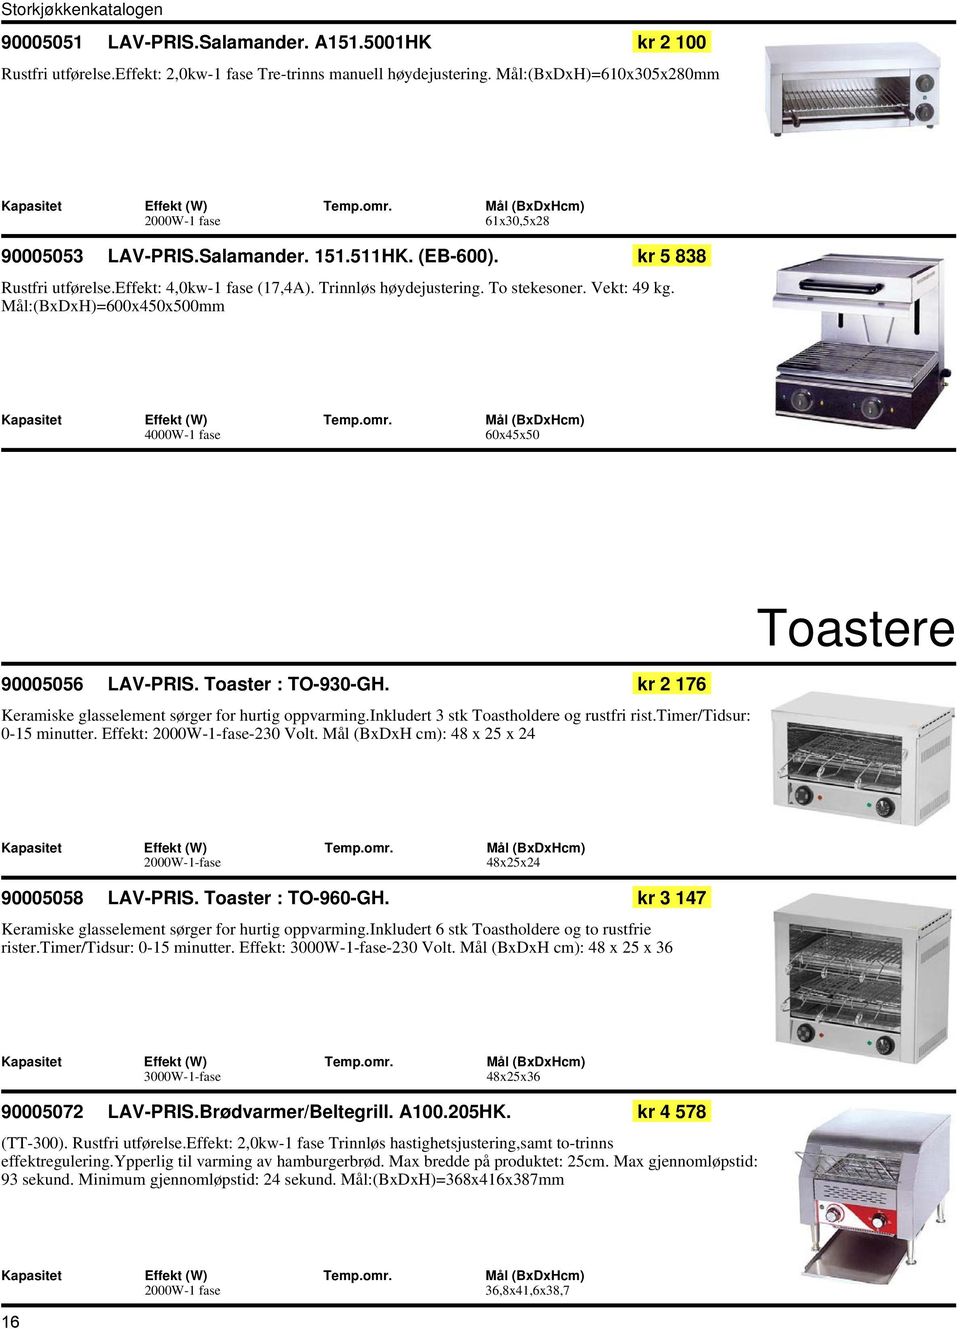 Vekt: 49 kg. Mål:(BxDxH)=600x450x500mm 4000W-1 fase 60x45x50 Toastere 90005056 LAV-PRIS. Toaster : TO-930-GH. kr 2 176 Keramiske glasselement sørger for hurtig oppvarming.